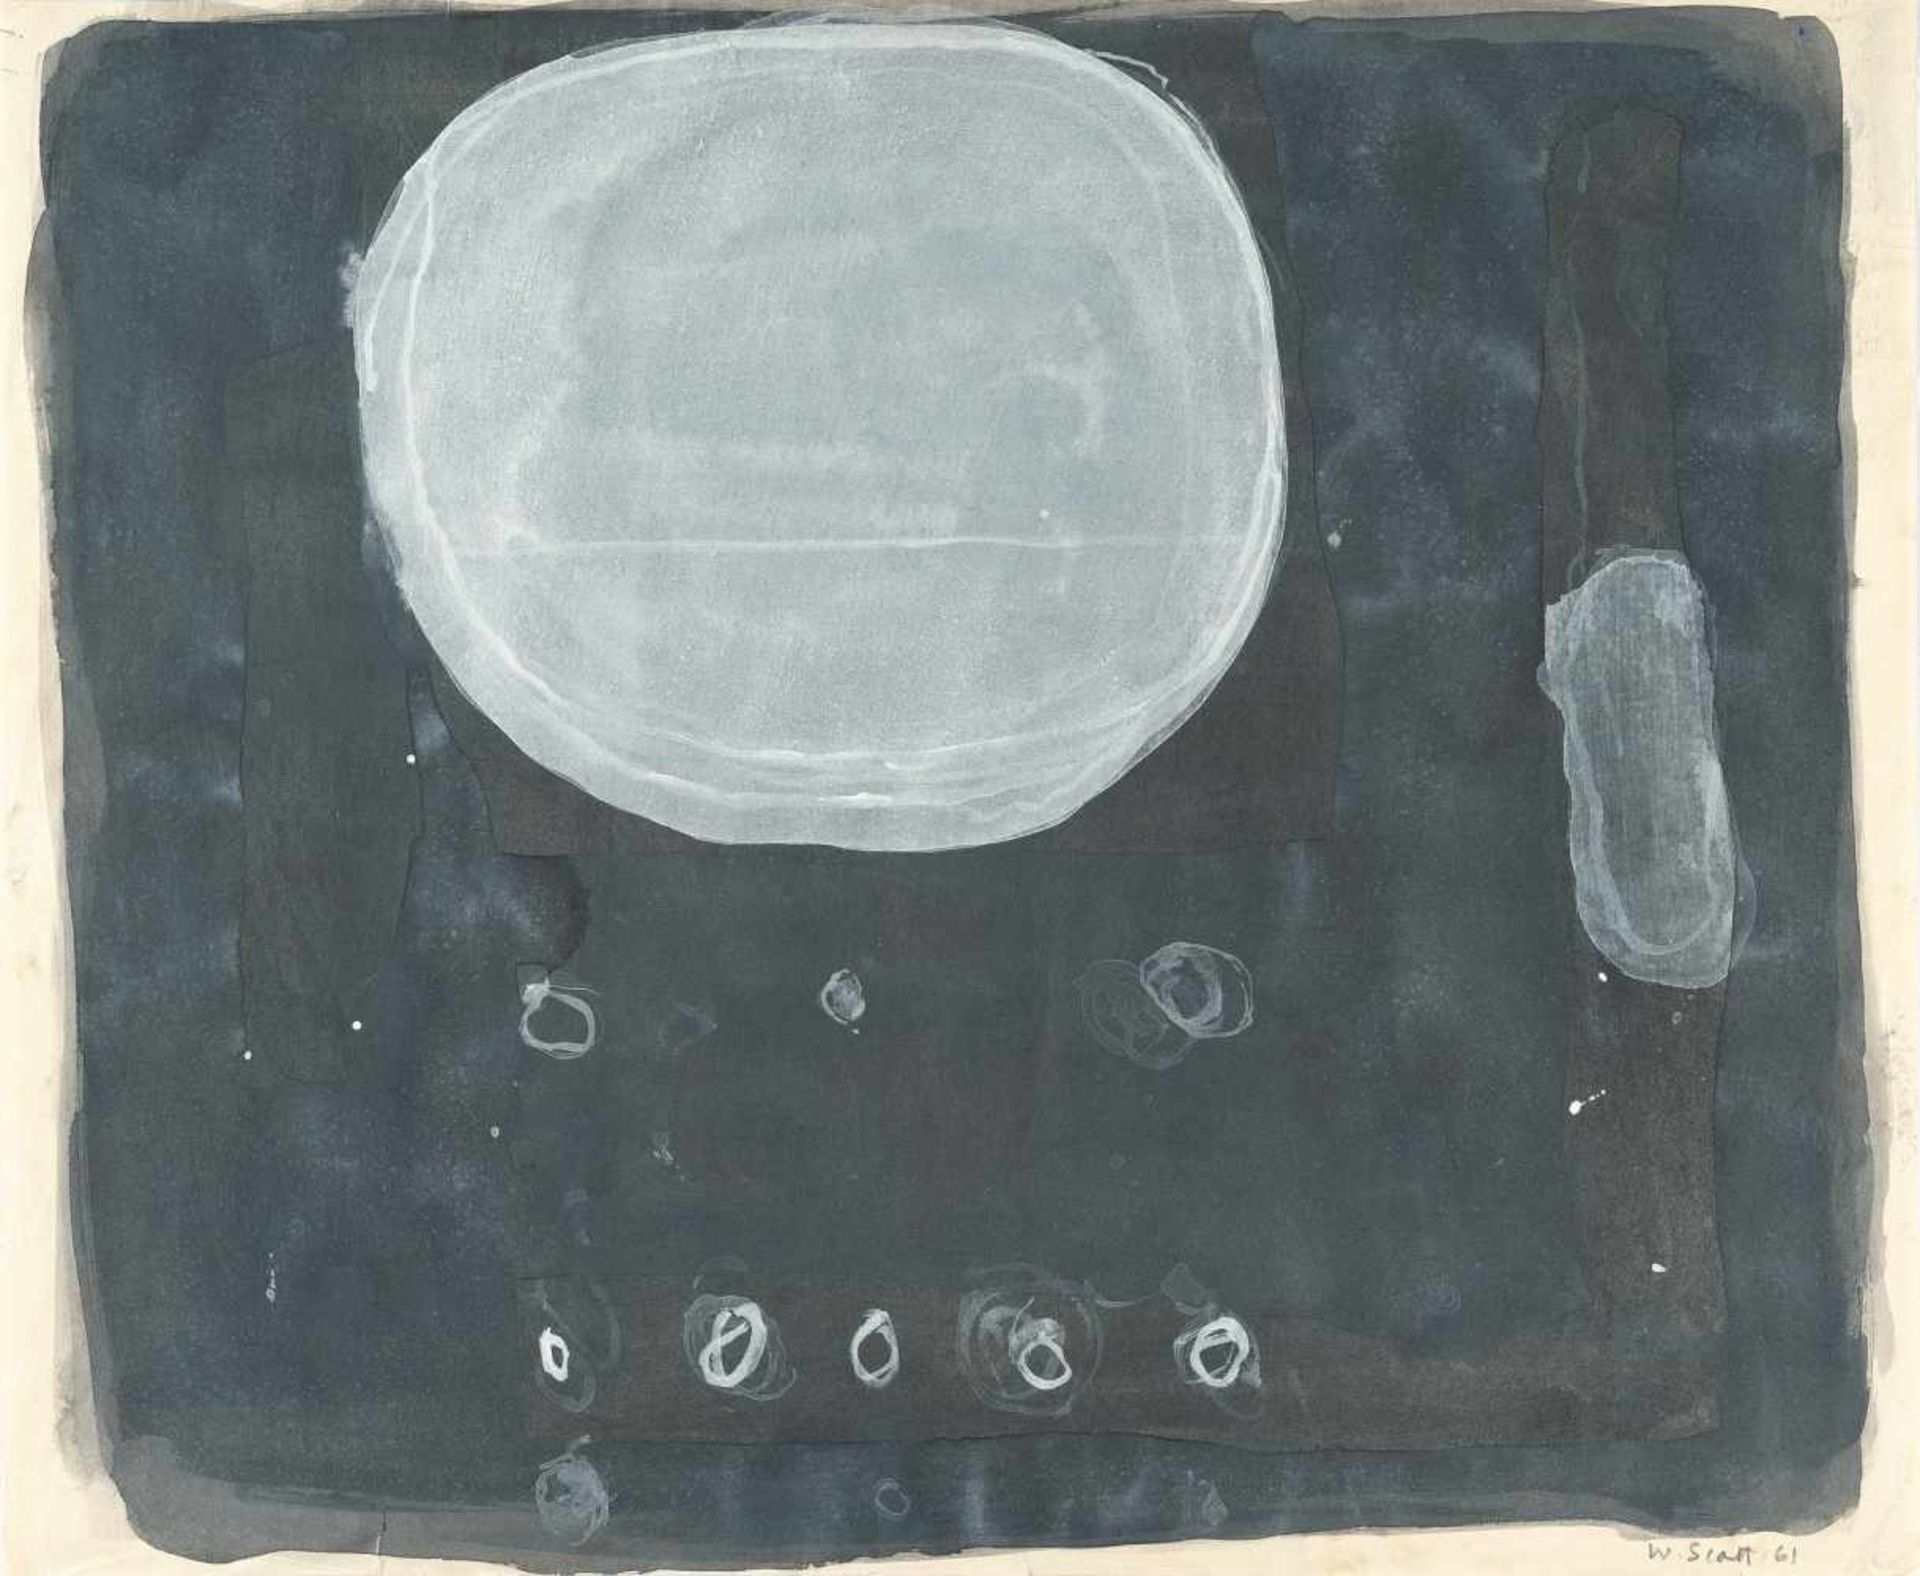 William ScottNo "41"Aquarell und Gouache auf feinem Bütten. (19)61. Ca. 50 x 61 cm. Signier